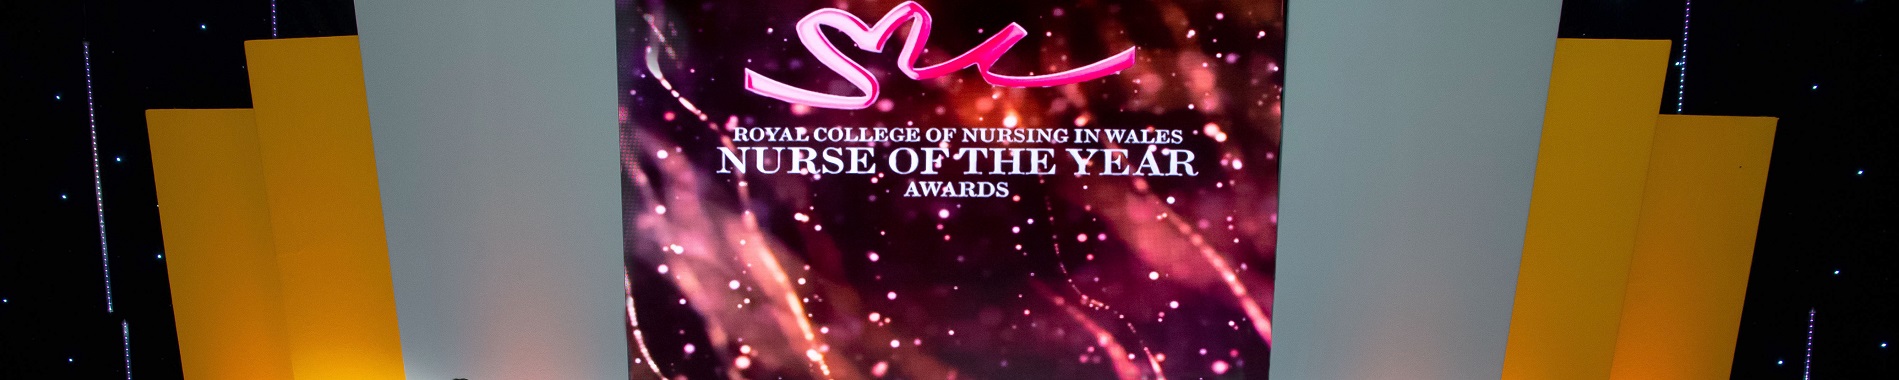 Nurse of the Year award 2018 banner 2